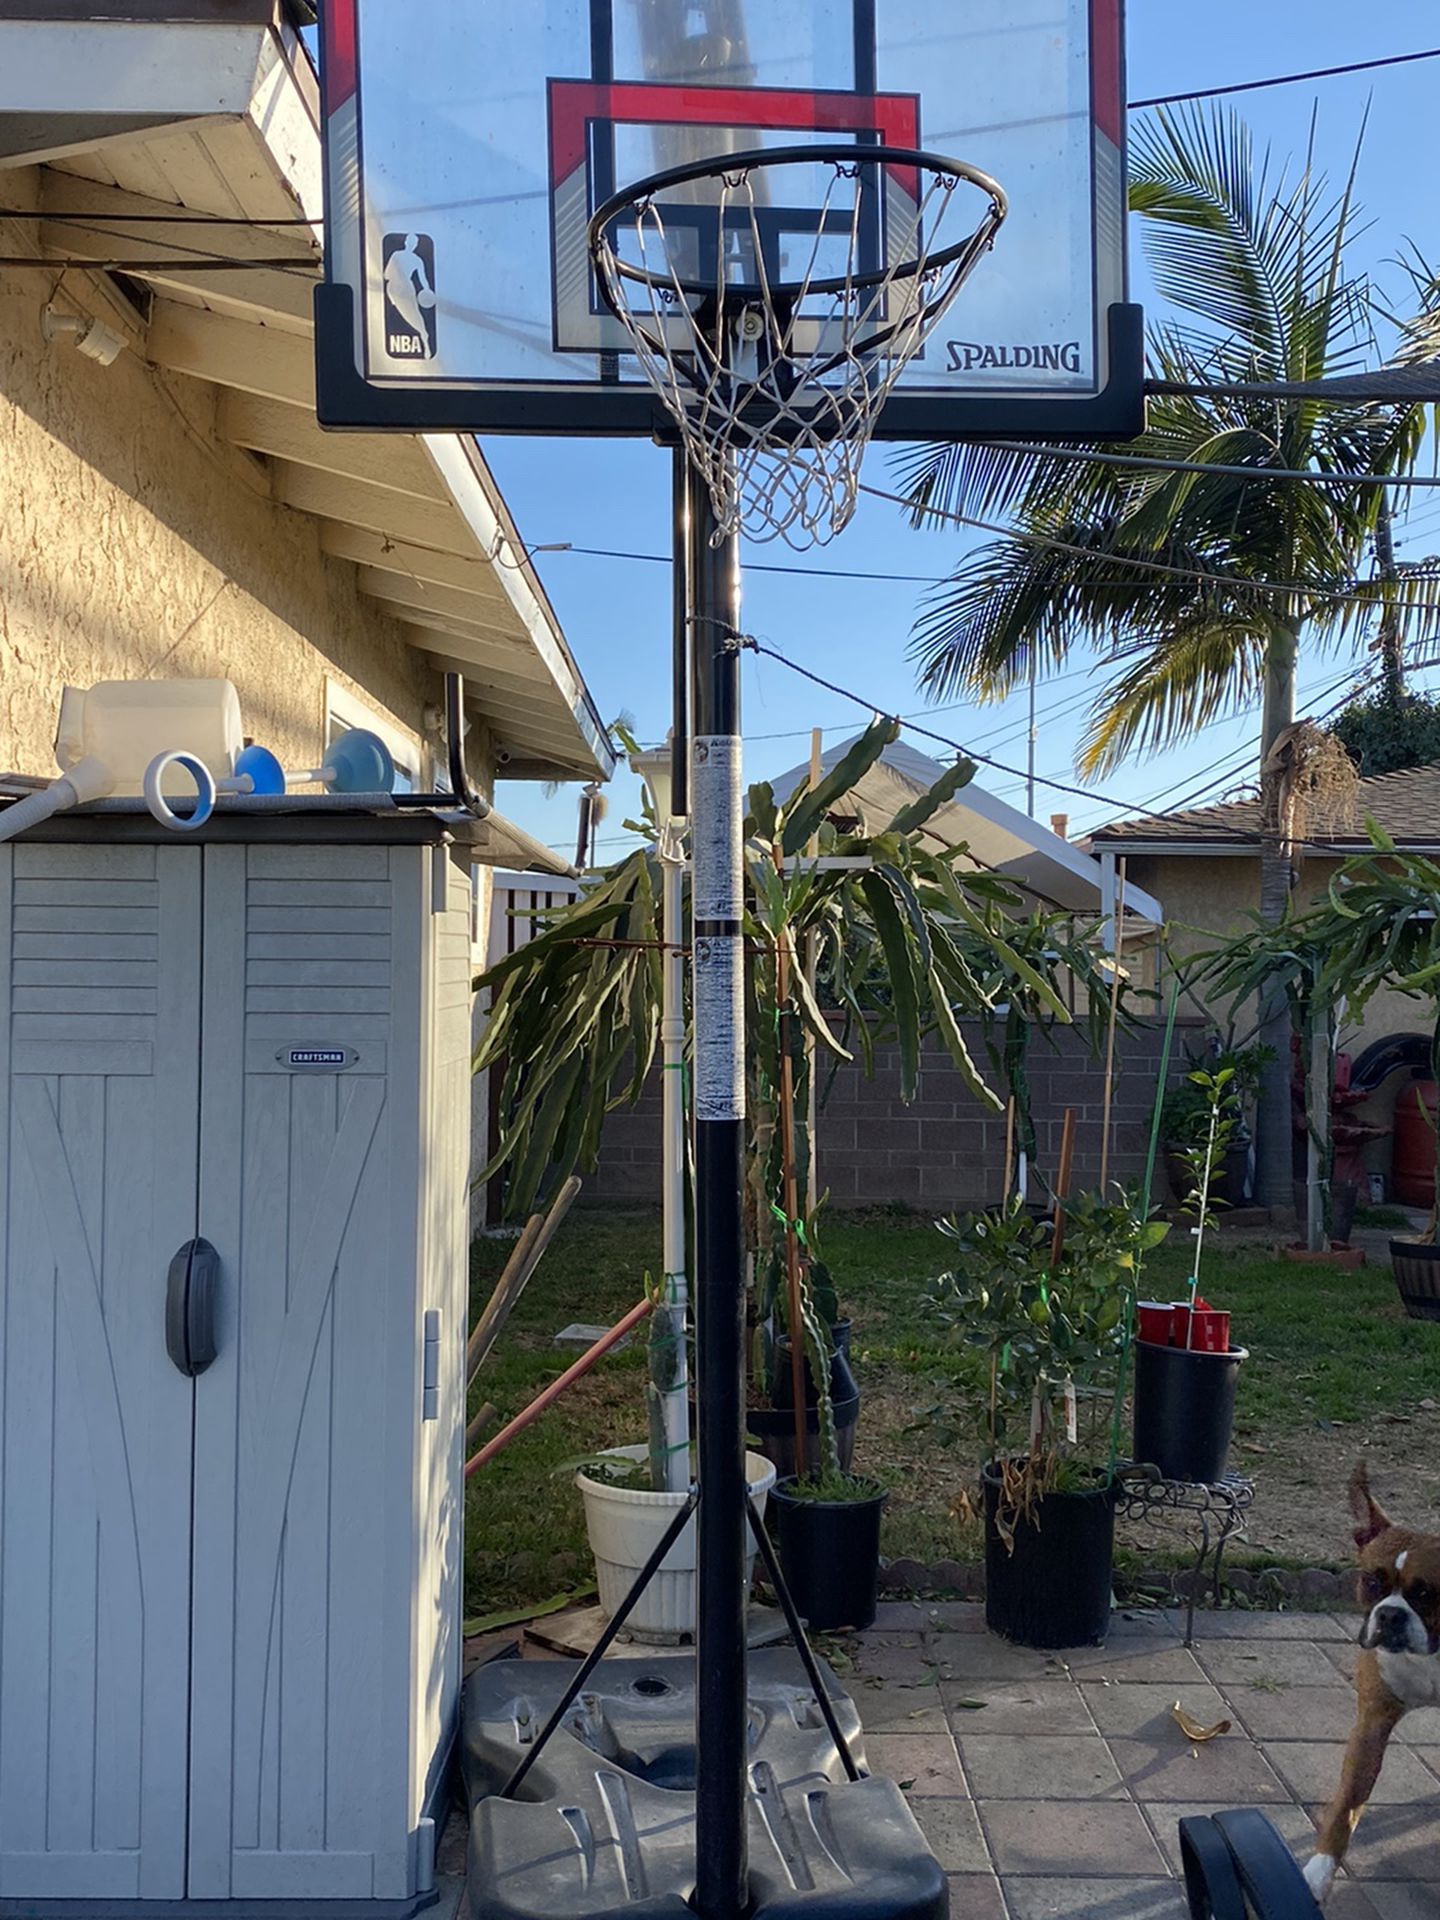 Portable Basketball Court